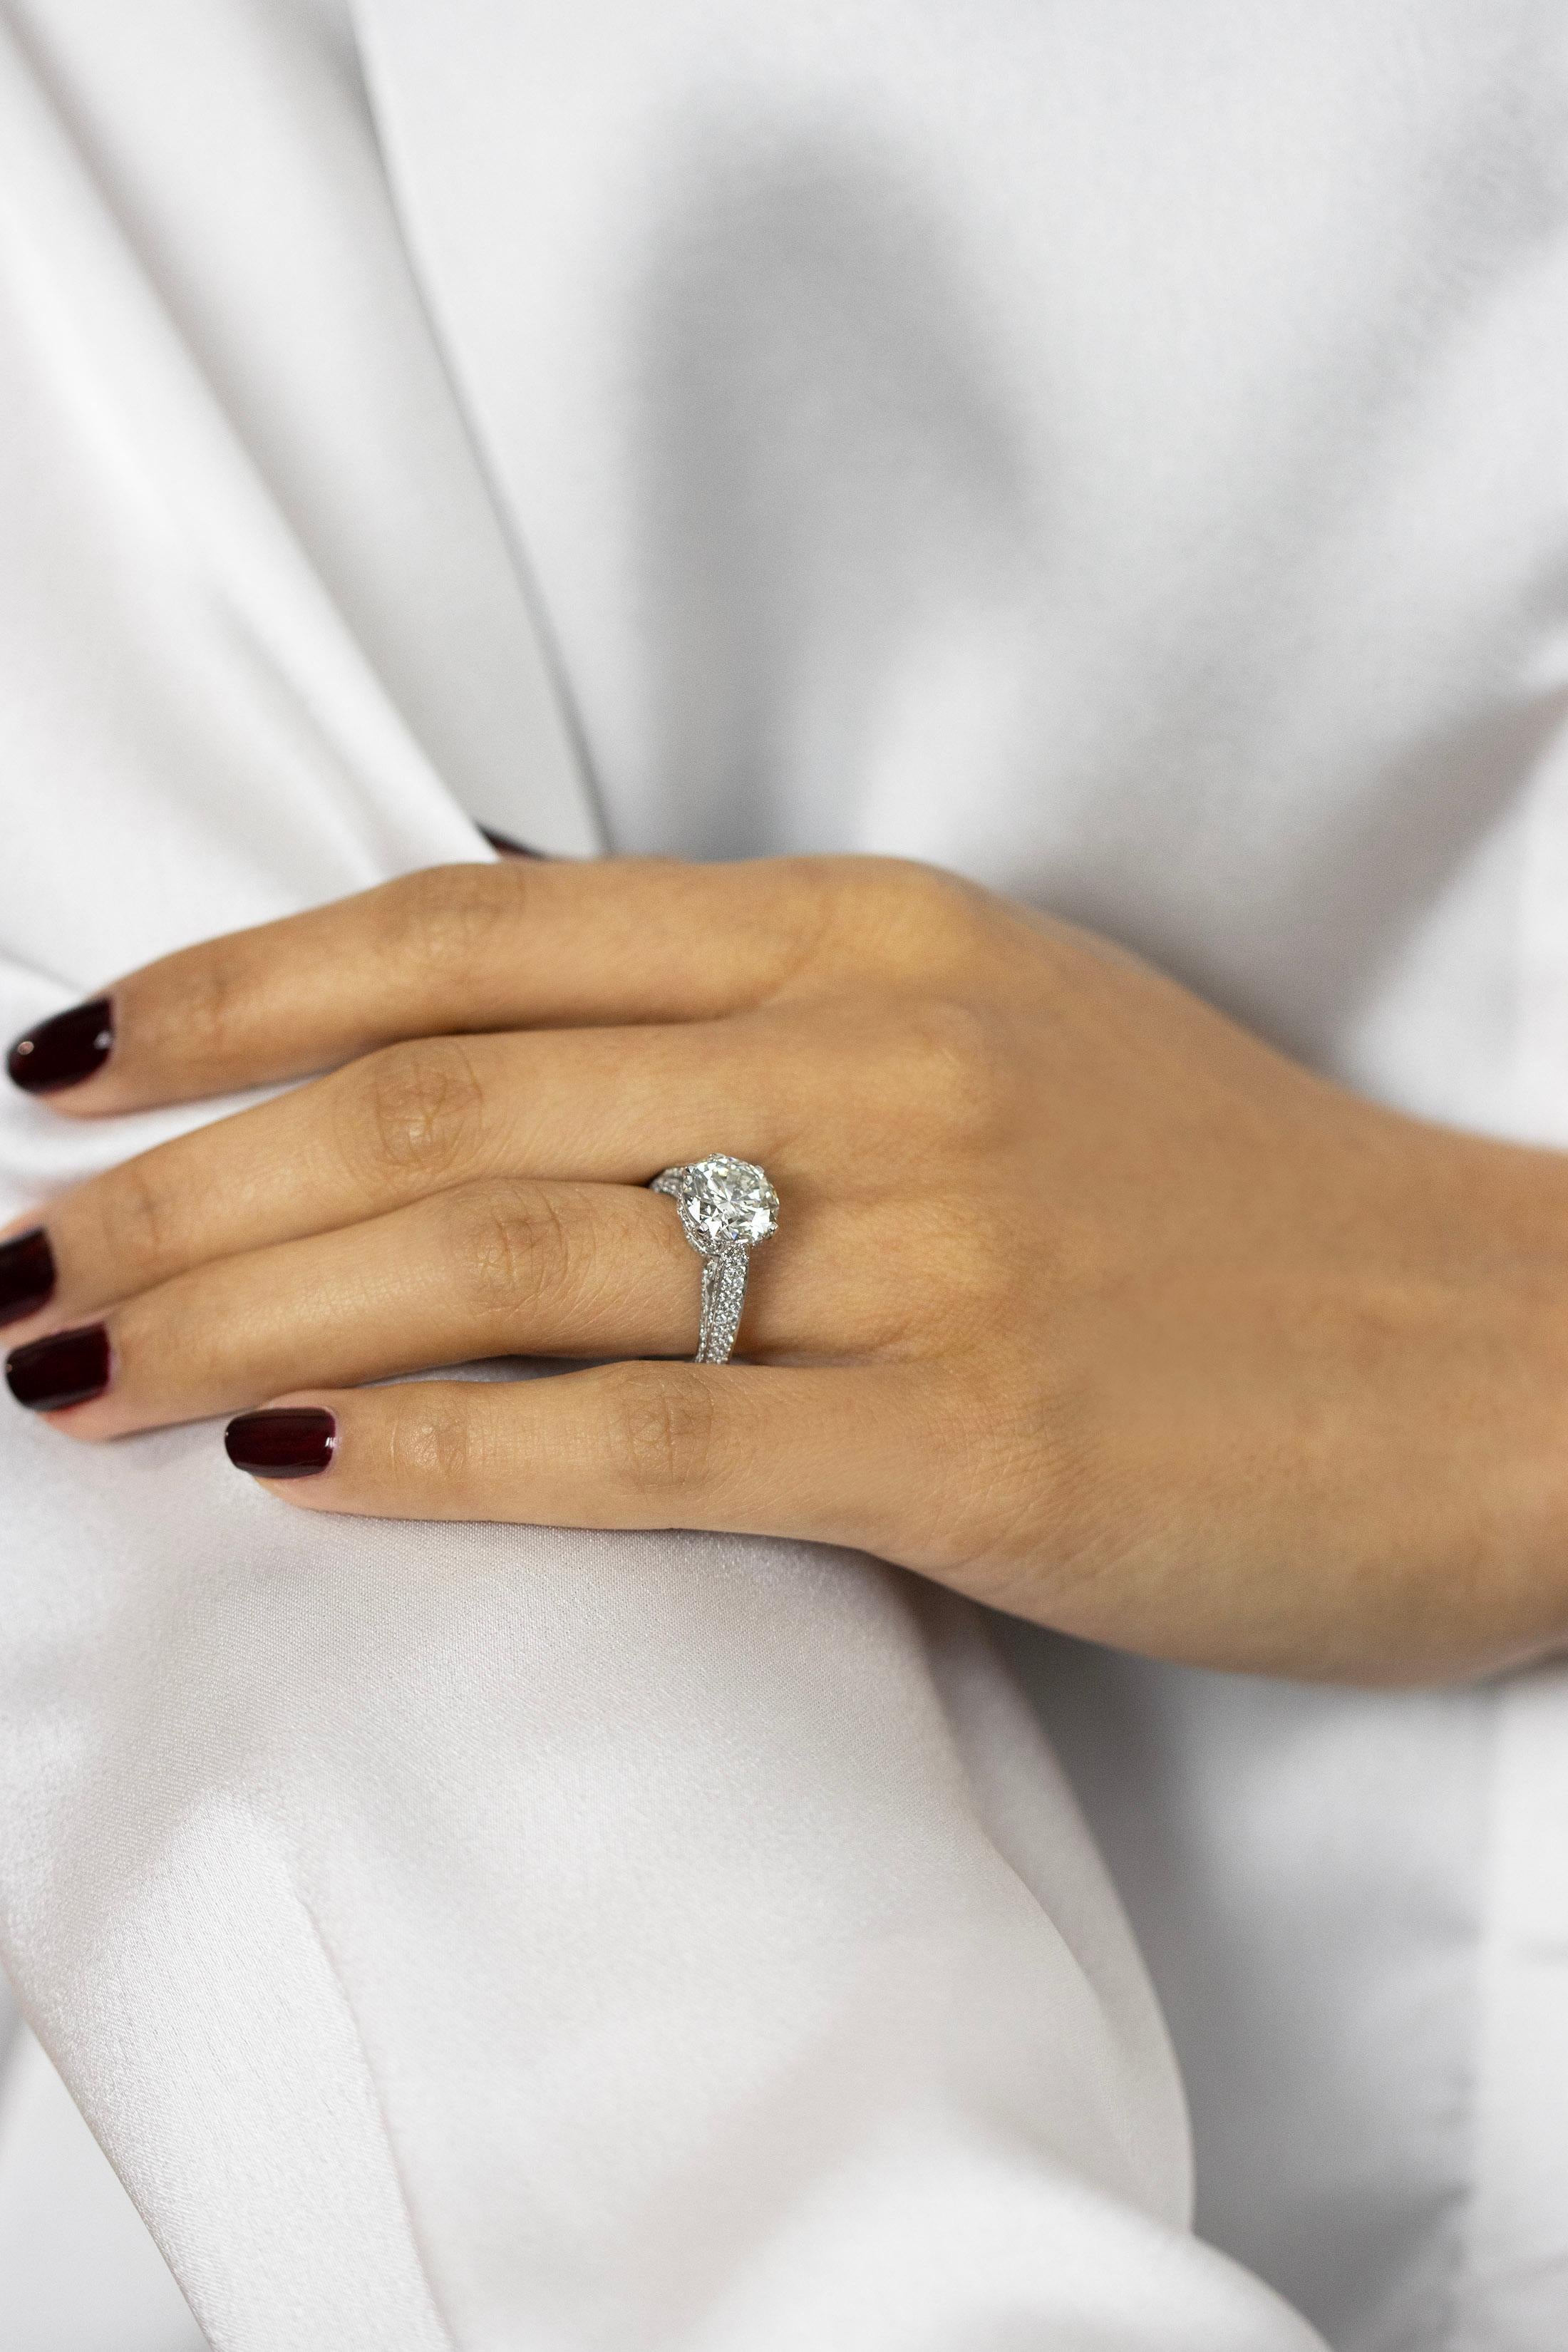 2.75 carat round diamond ring